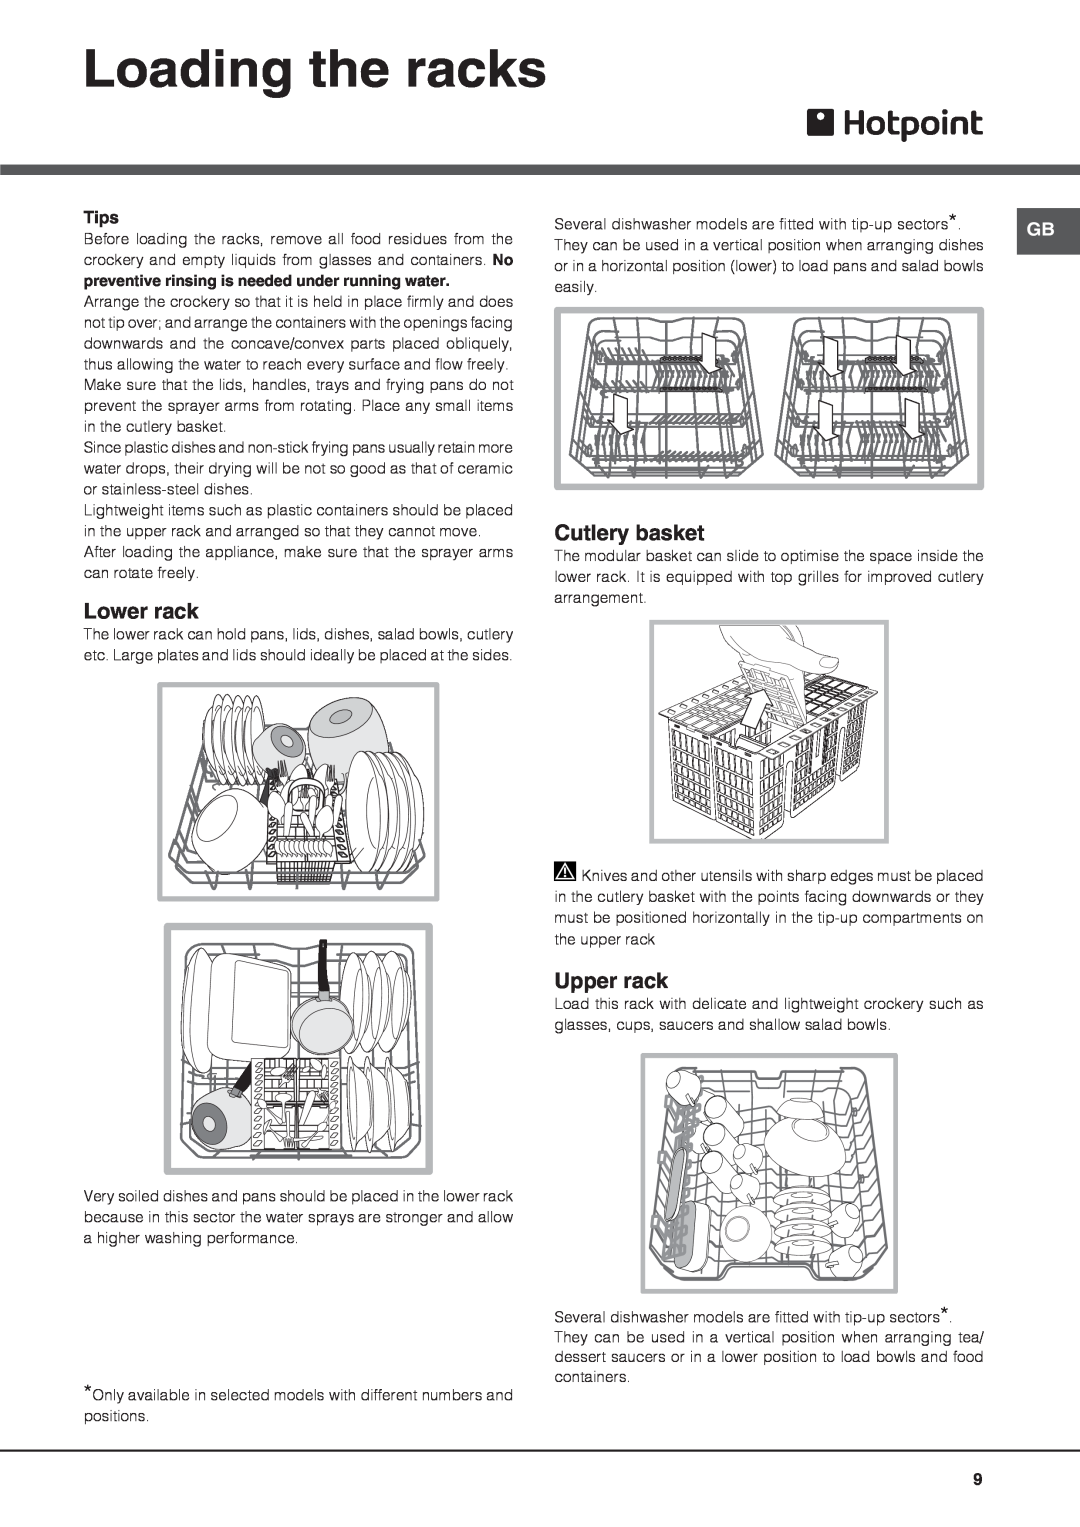 Hotpoint FDFL 11010 manual Loading the racks, Lower rack, Cutlery basket, Upper rack, Tips 